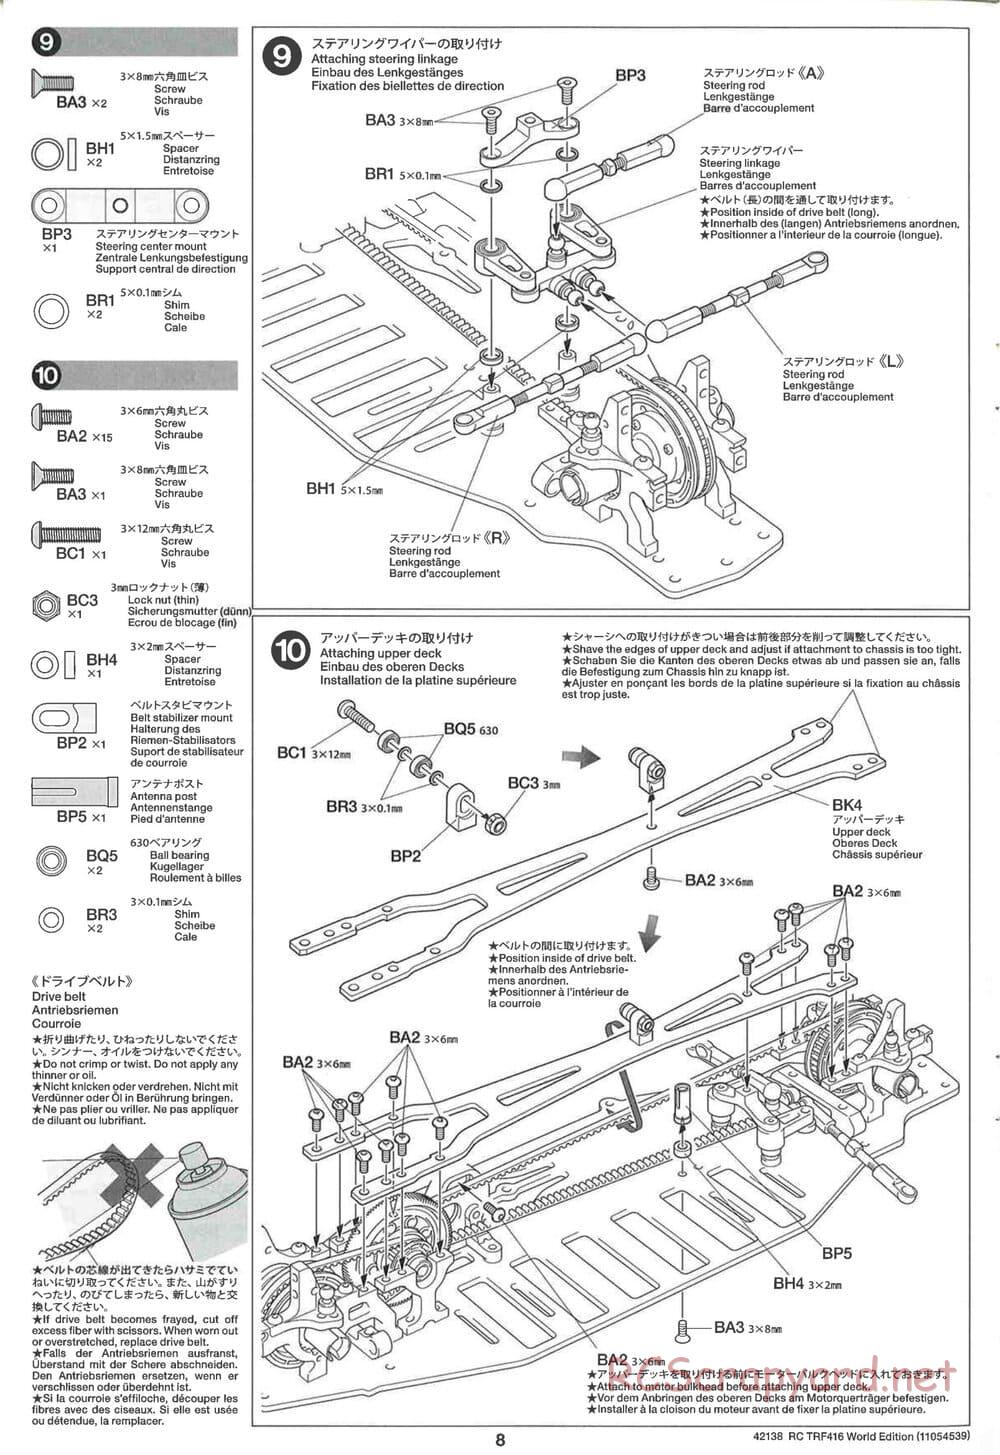 Tamiya - TRF416 World Edition Chassis - Manual - Page 8